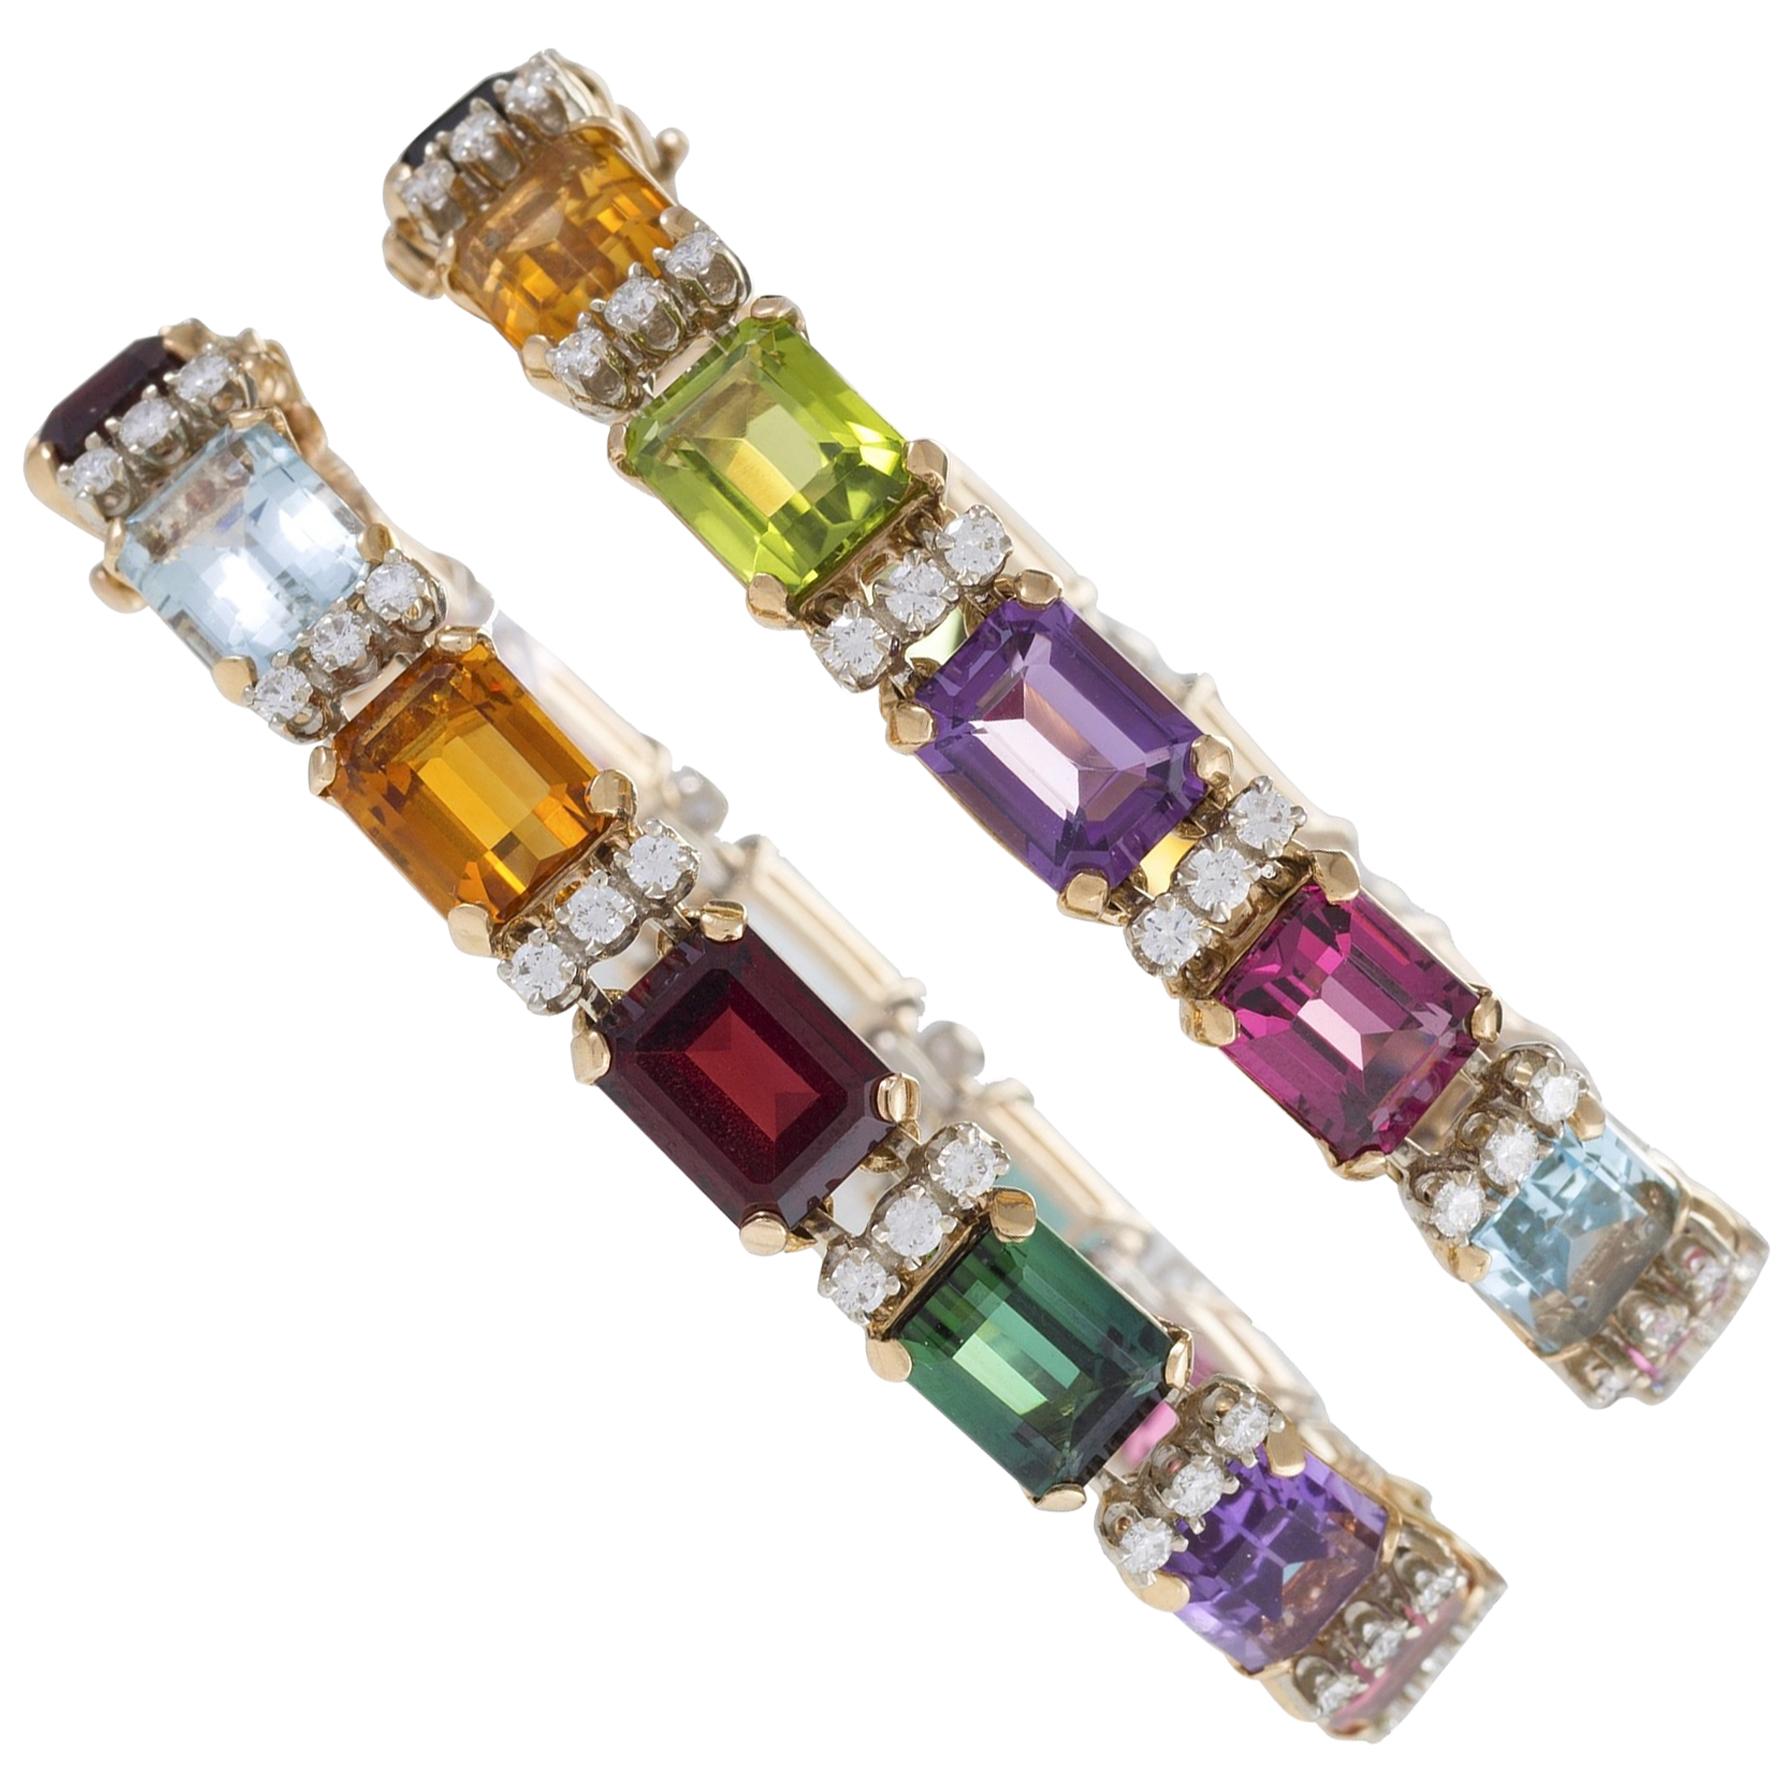 Pair of Diamond and Multi-Colored Gemstone Bracelets